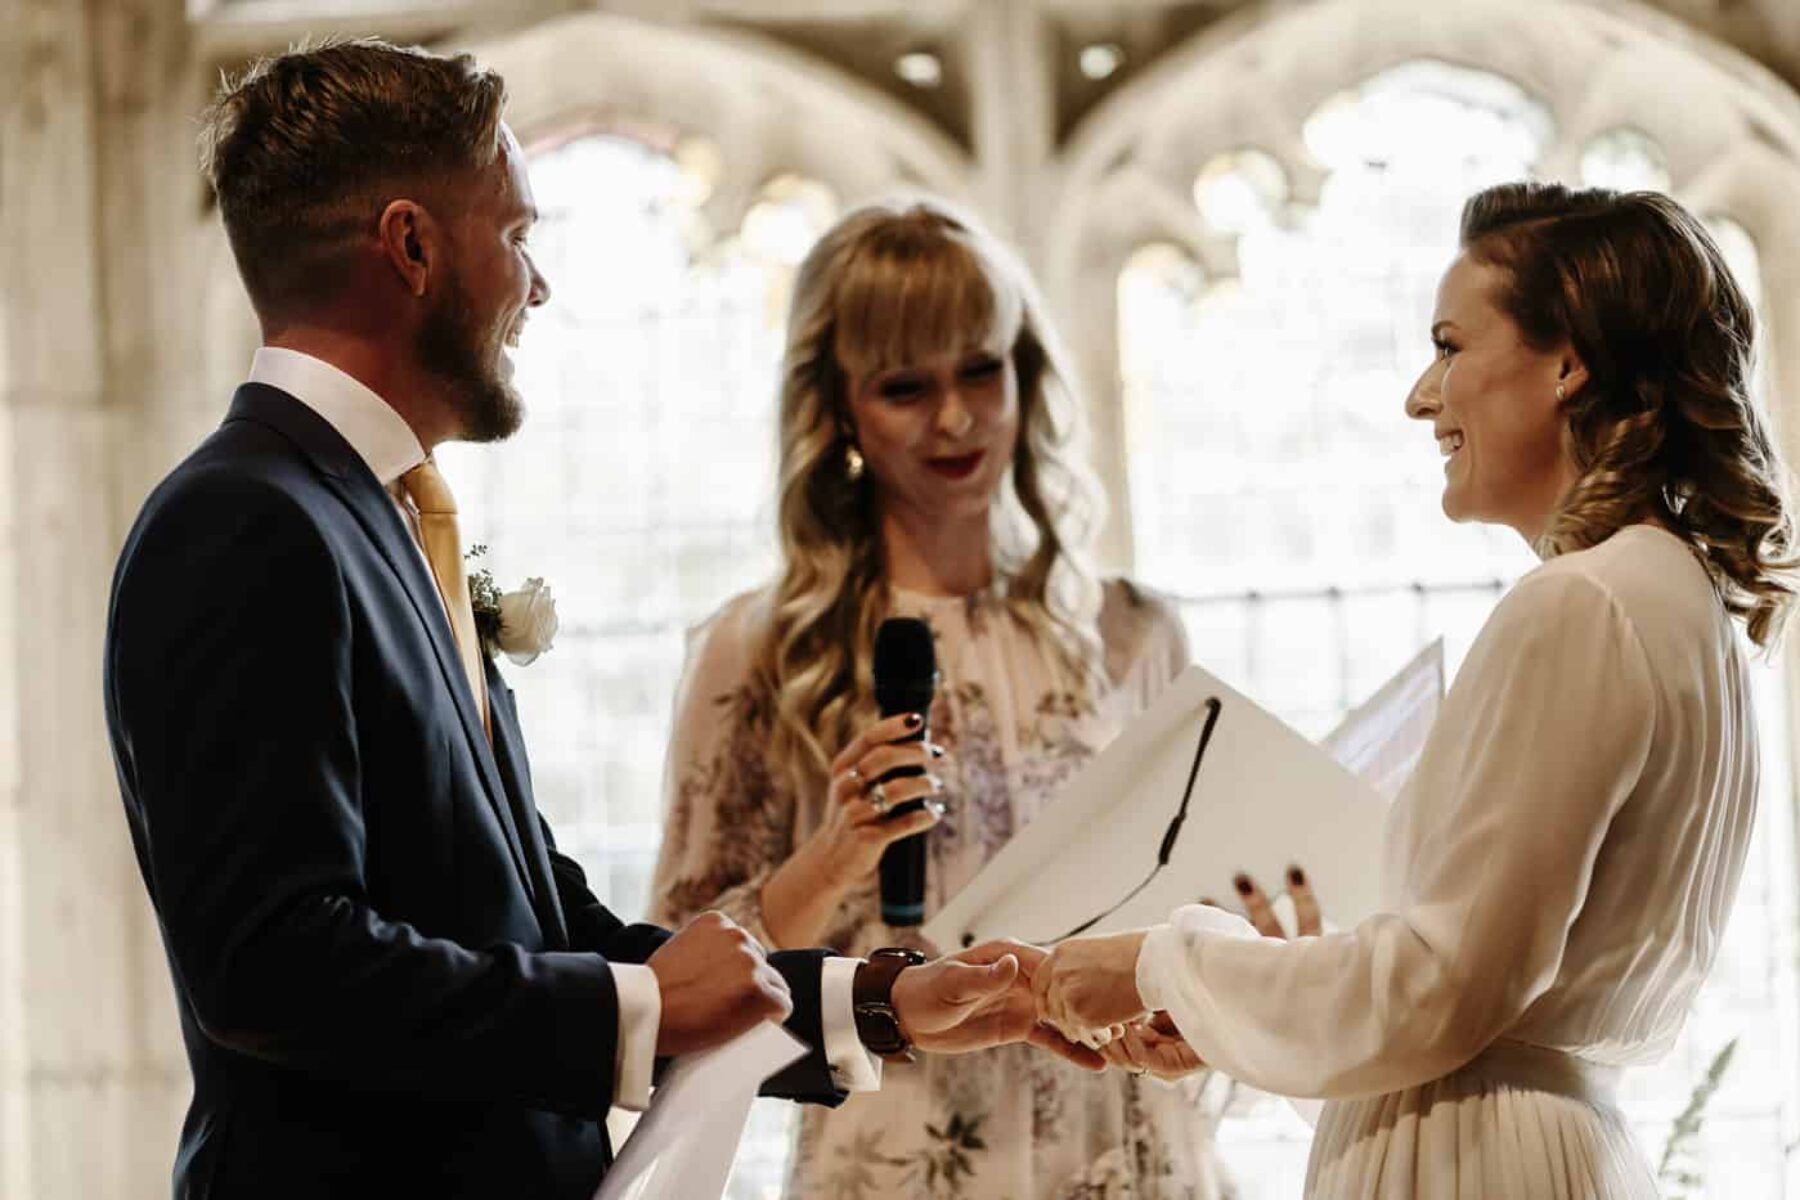 Moody Melbourne wedding at Montsalvat - photography by Oli Sansom